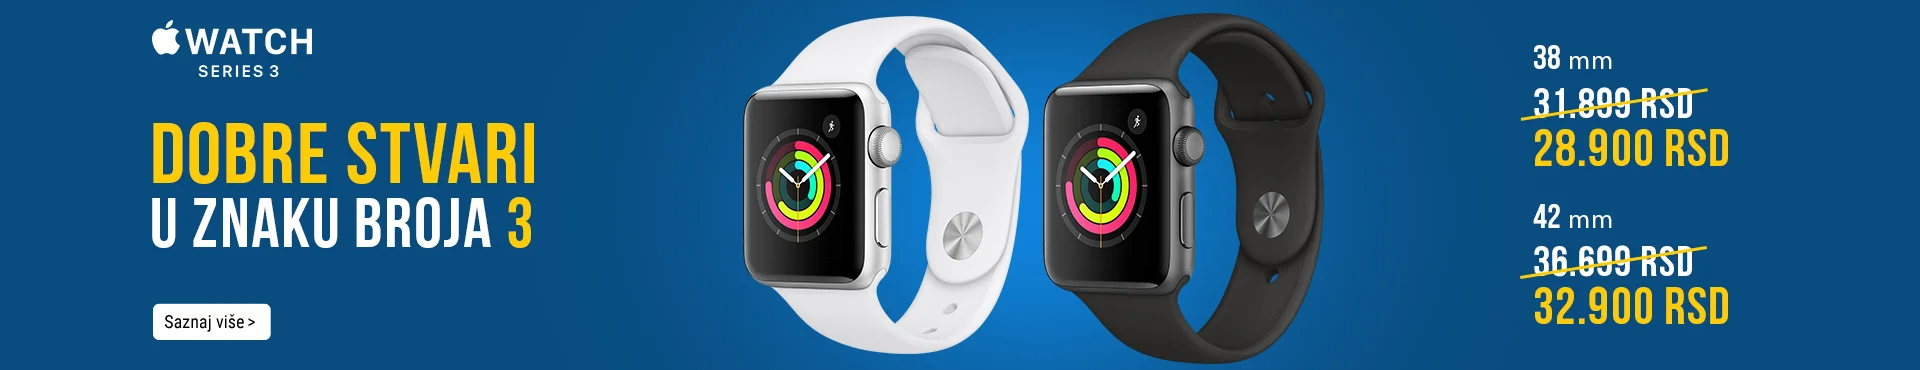 Apple Watch po sniženim cenama